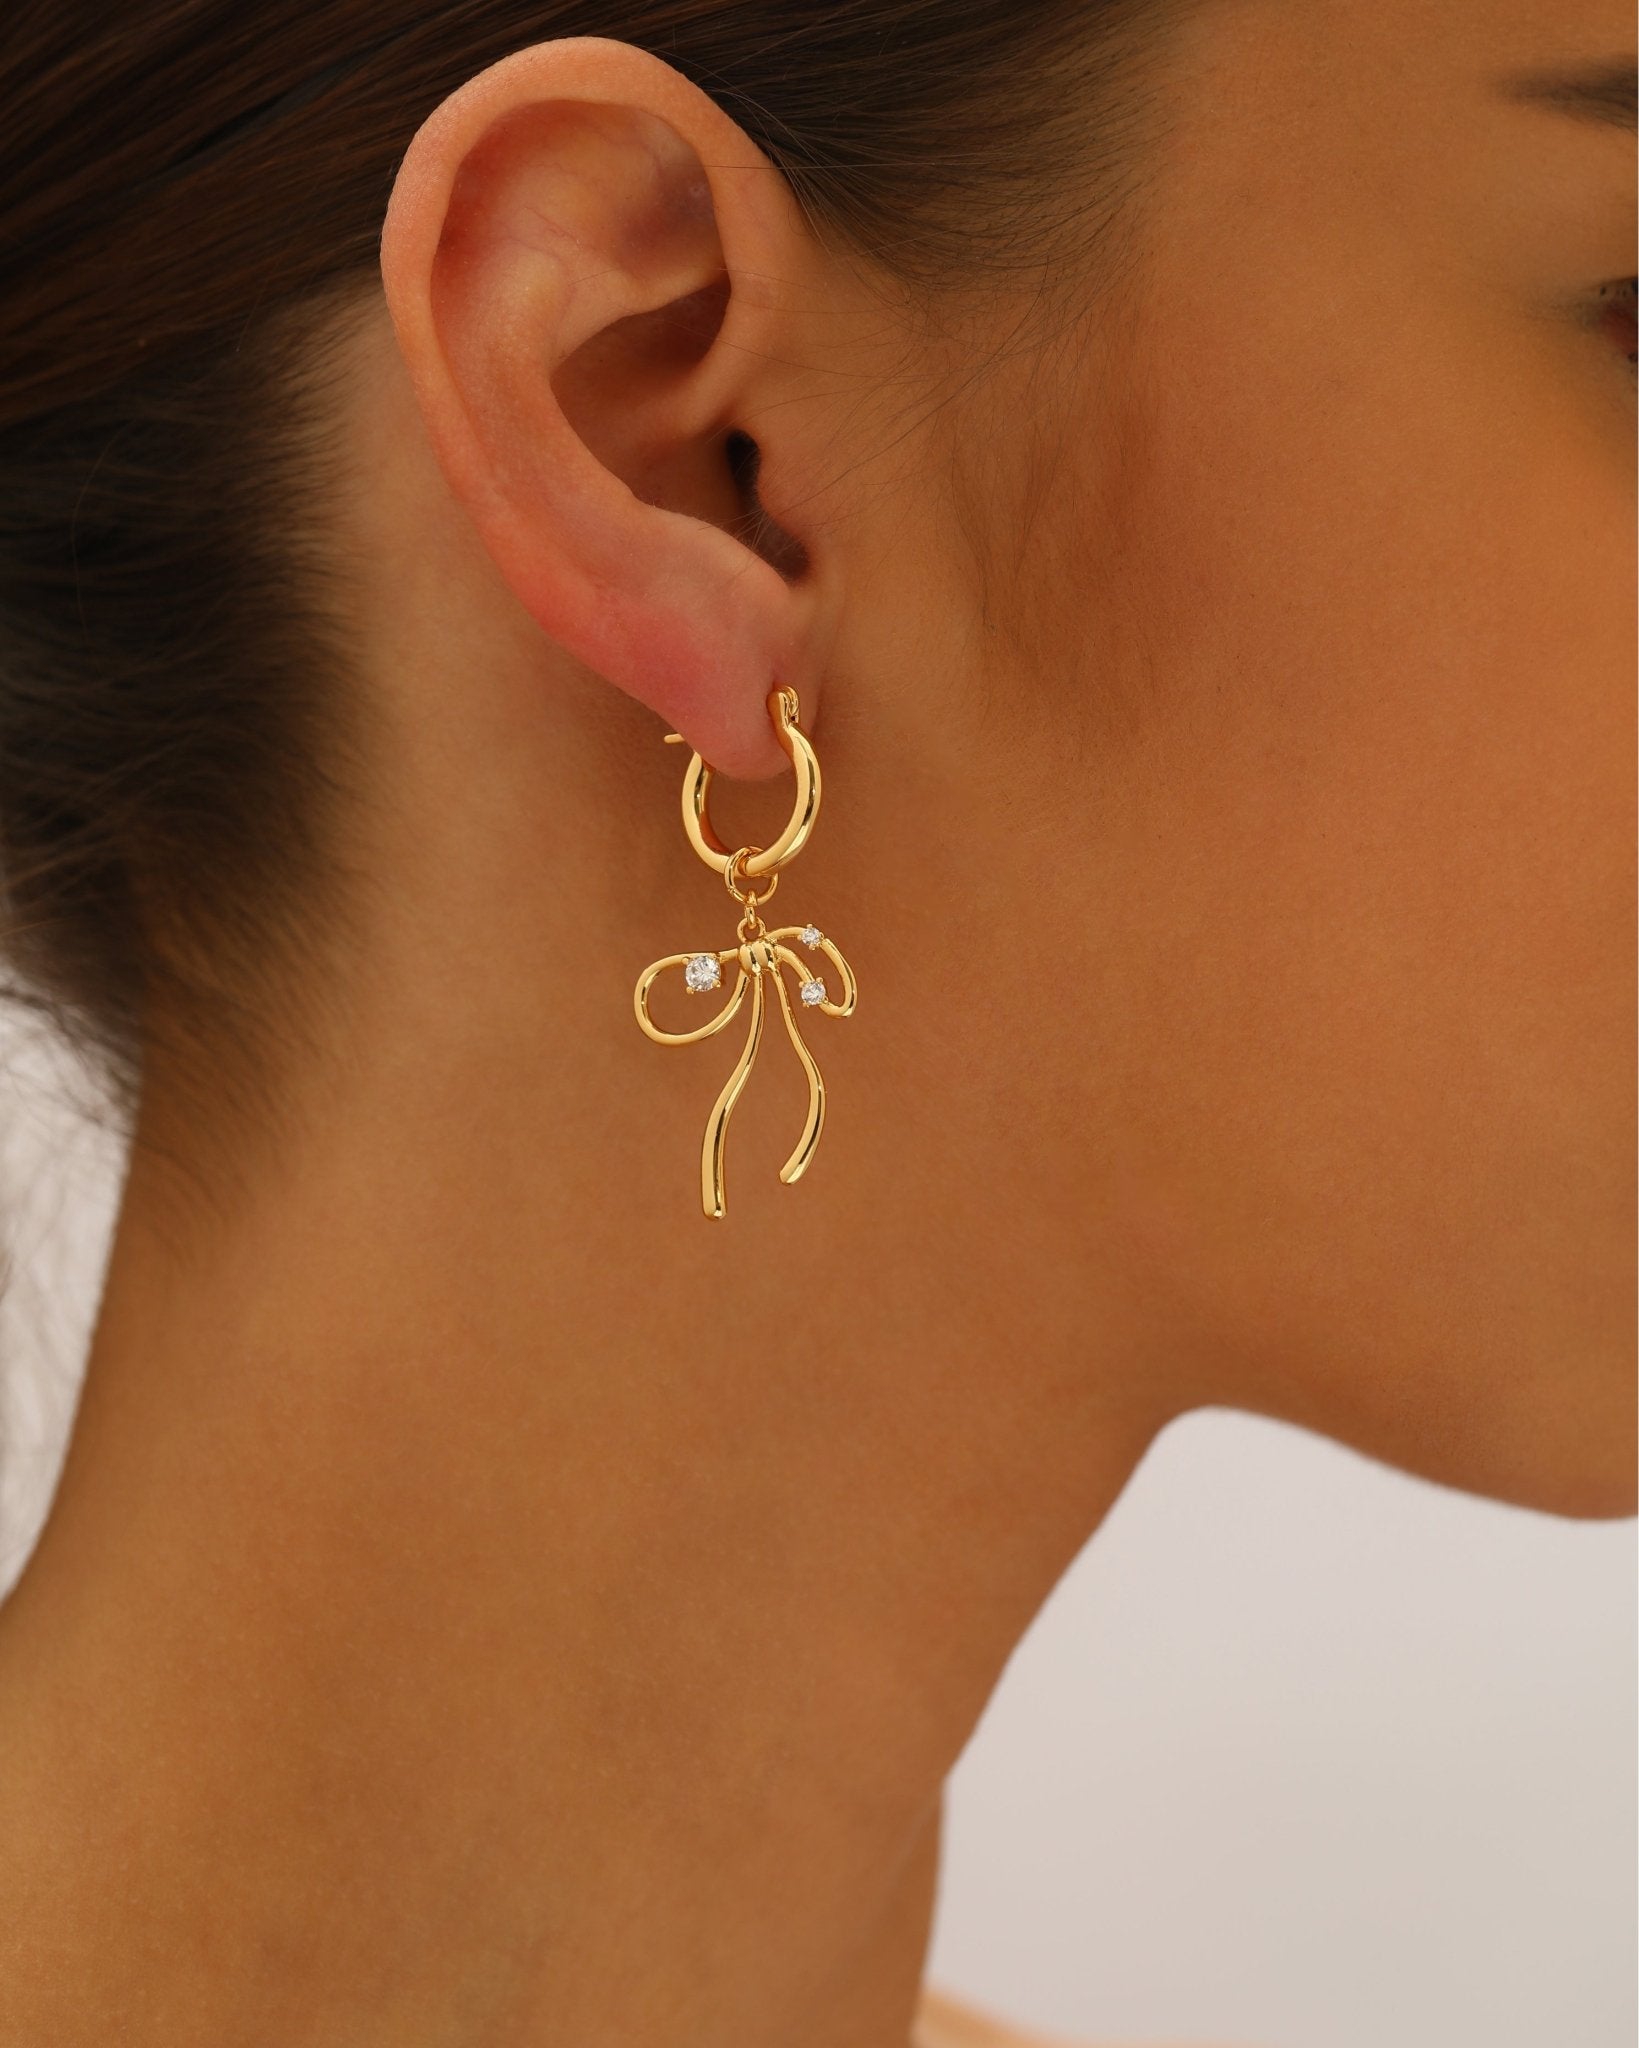 The Miffy Des boucles d'oreilles in Gold